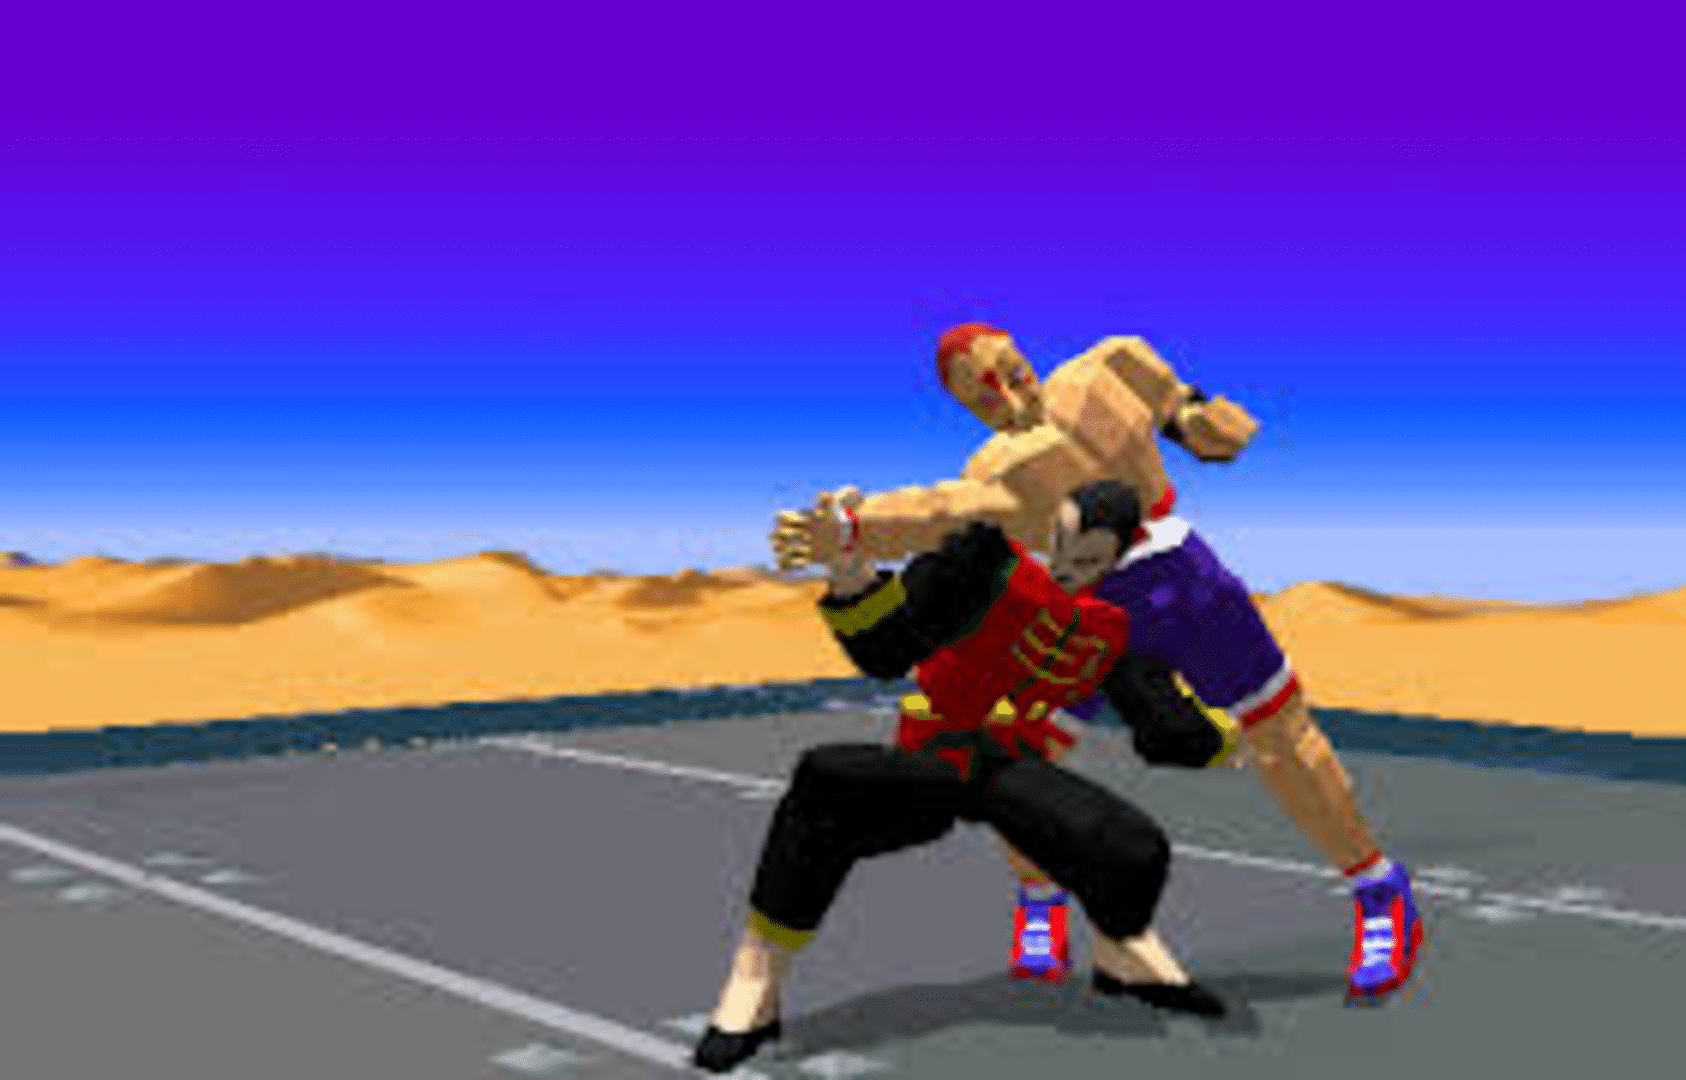 Virtua Fighter screenshot